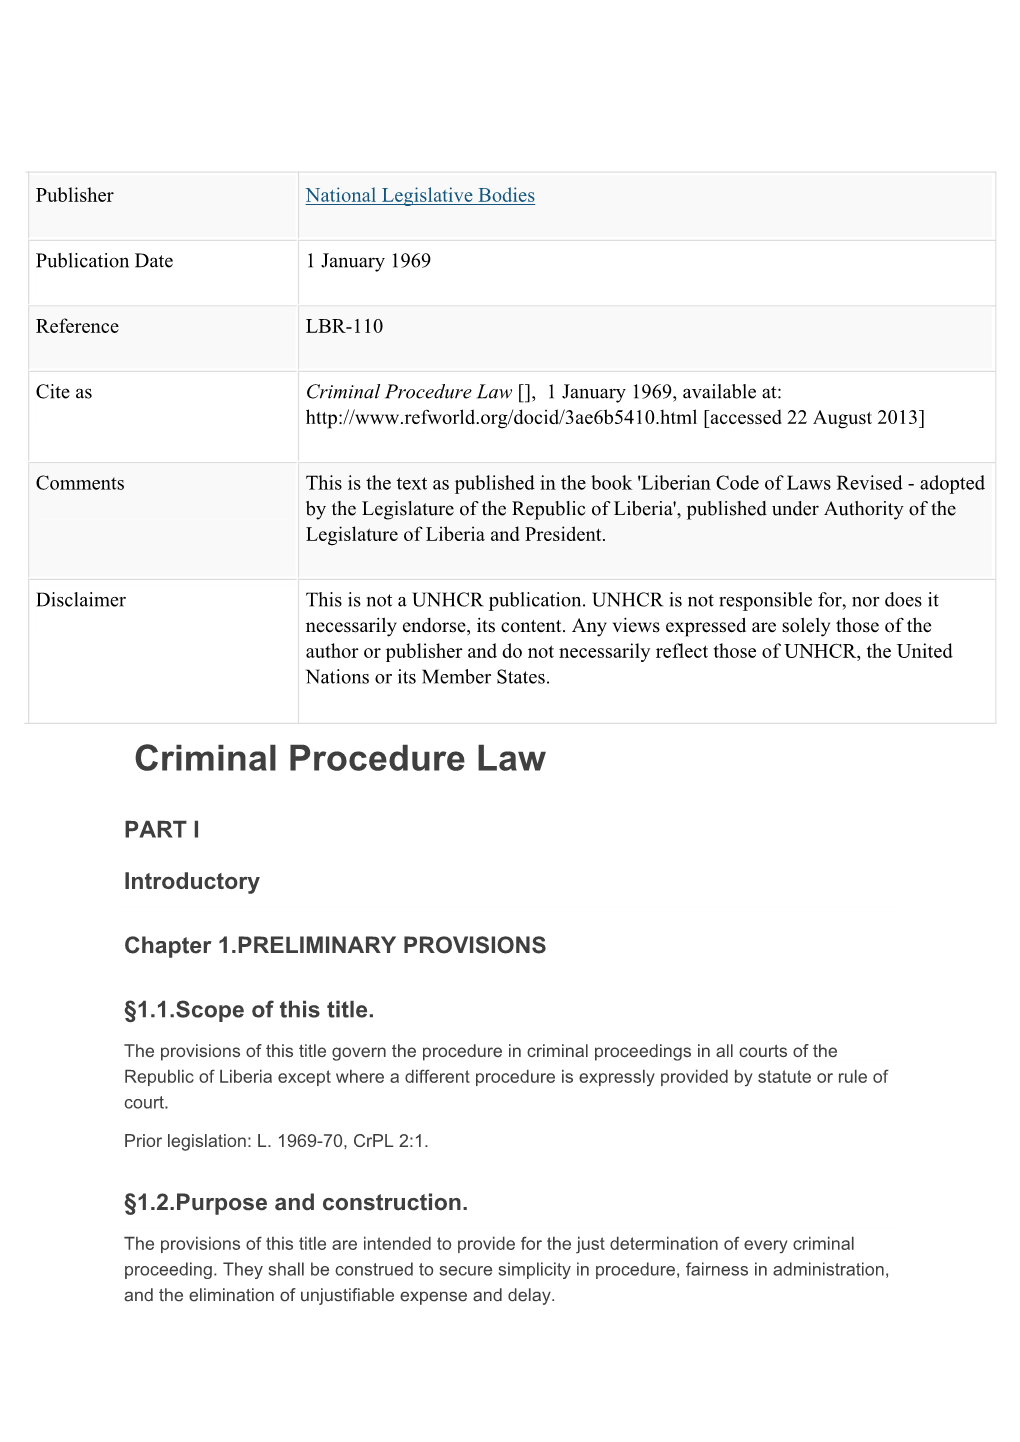 Criminal Procedure Law 1969